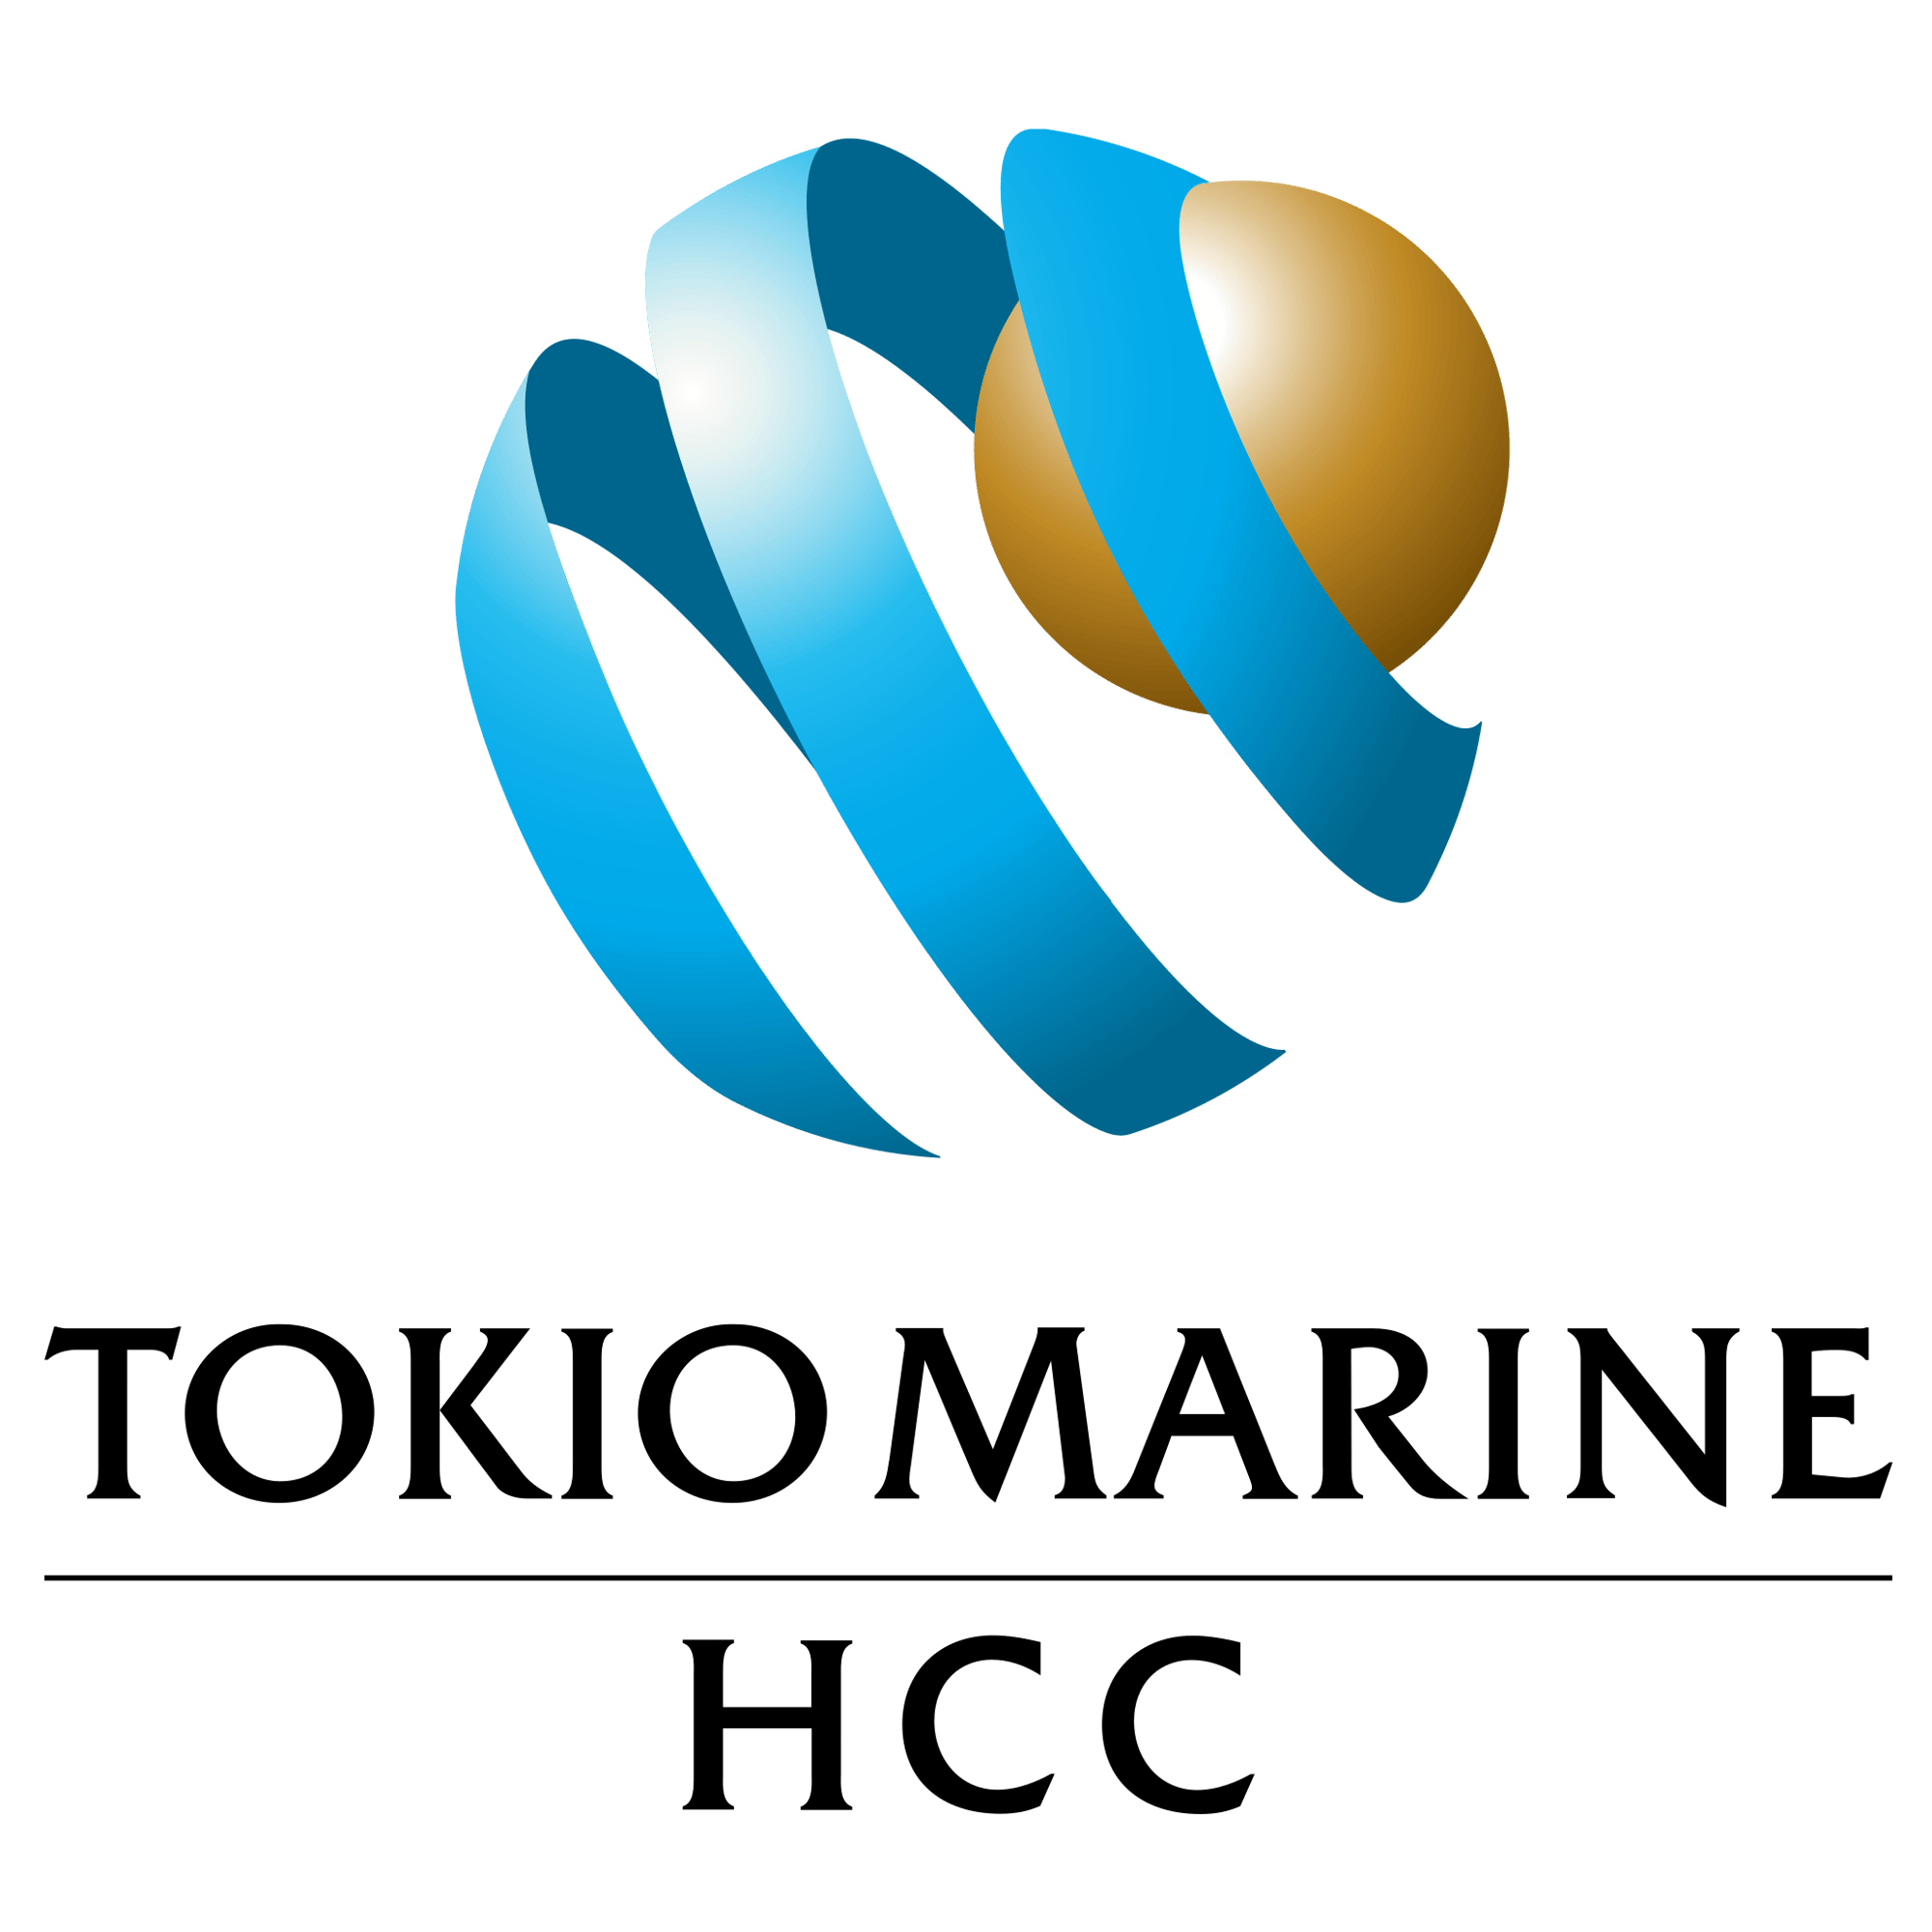 Tokio-marine-hcc-logo